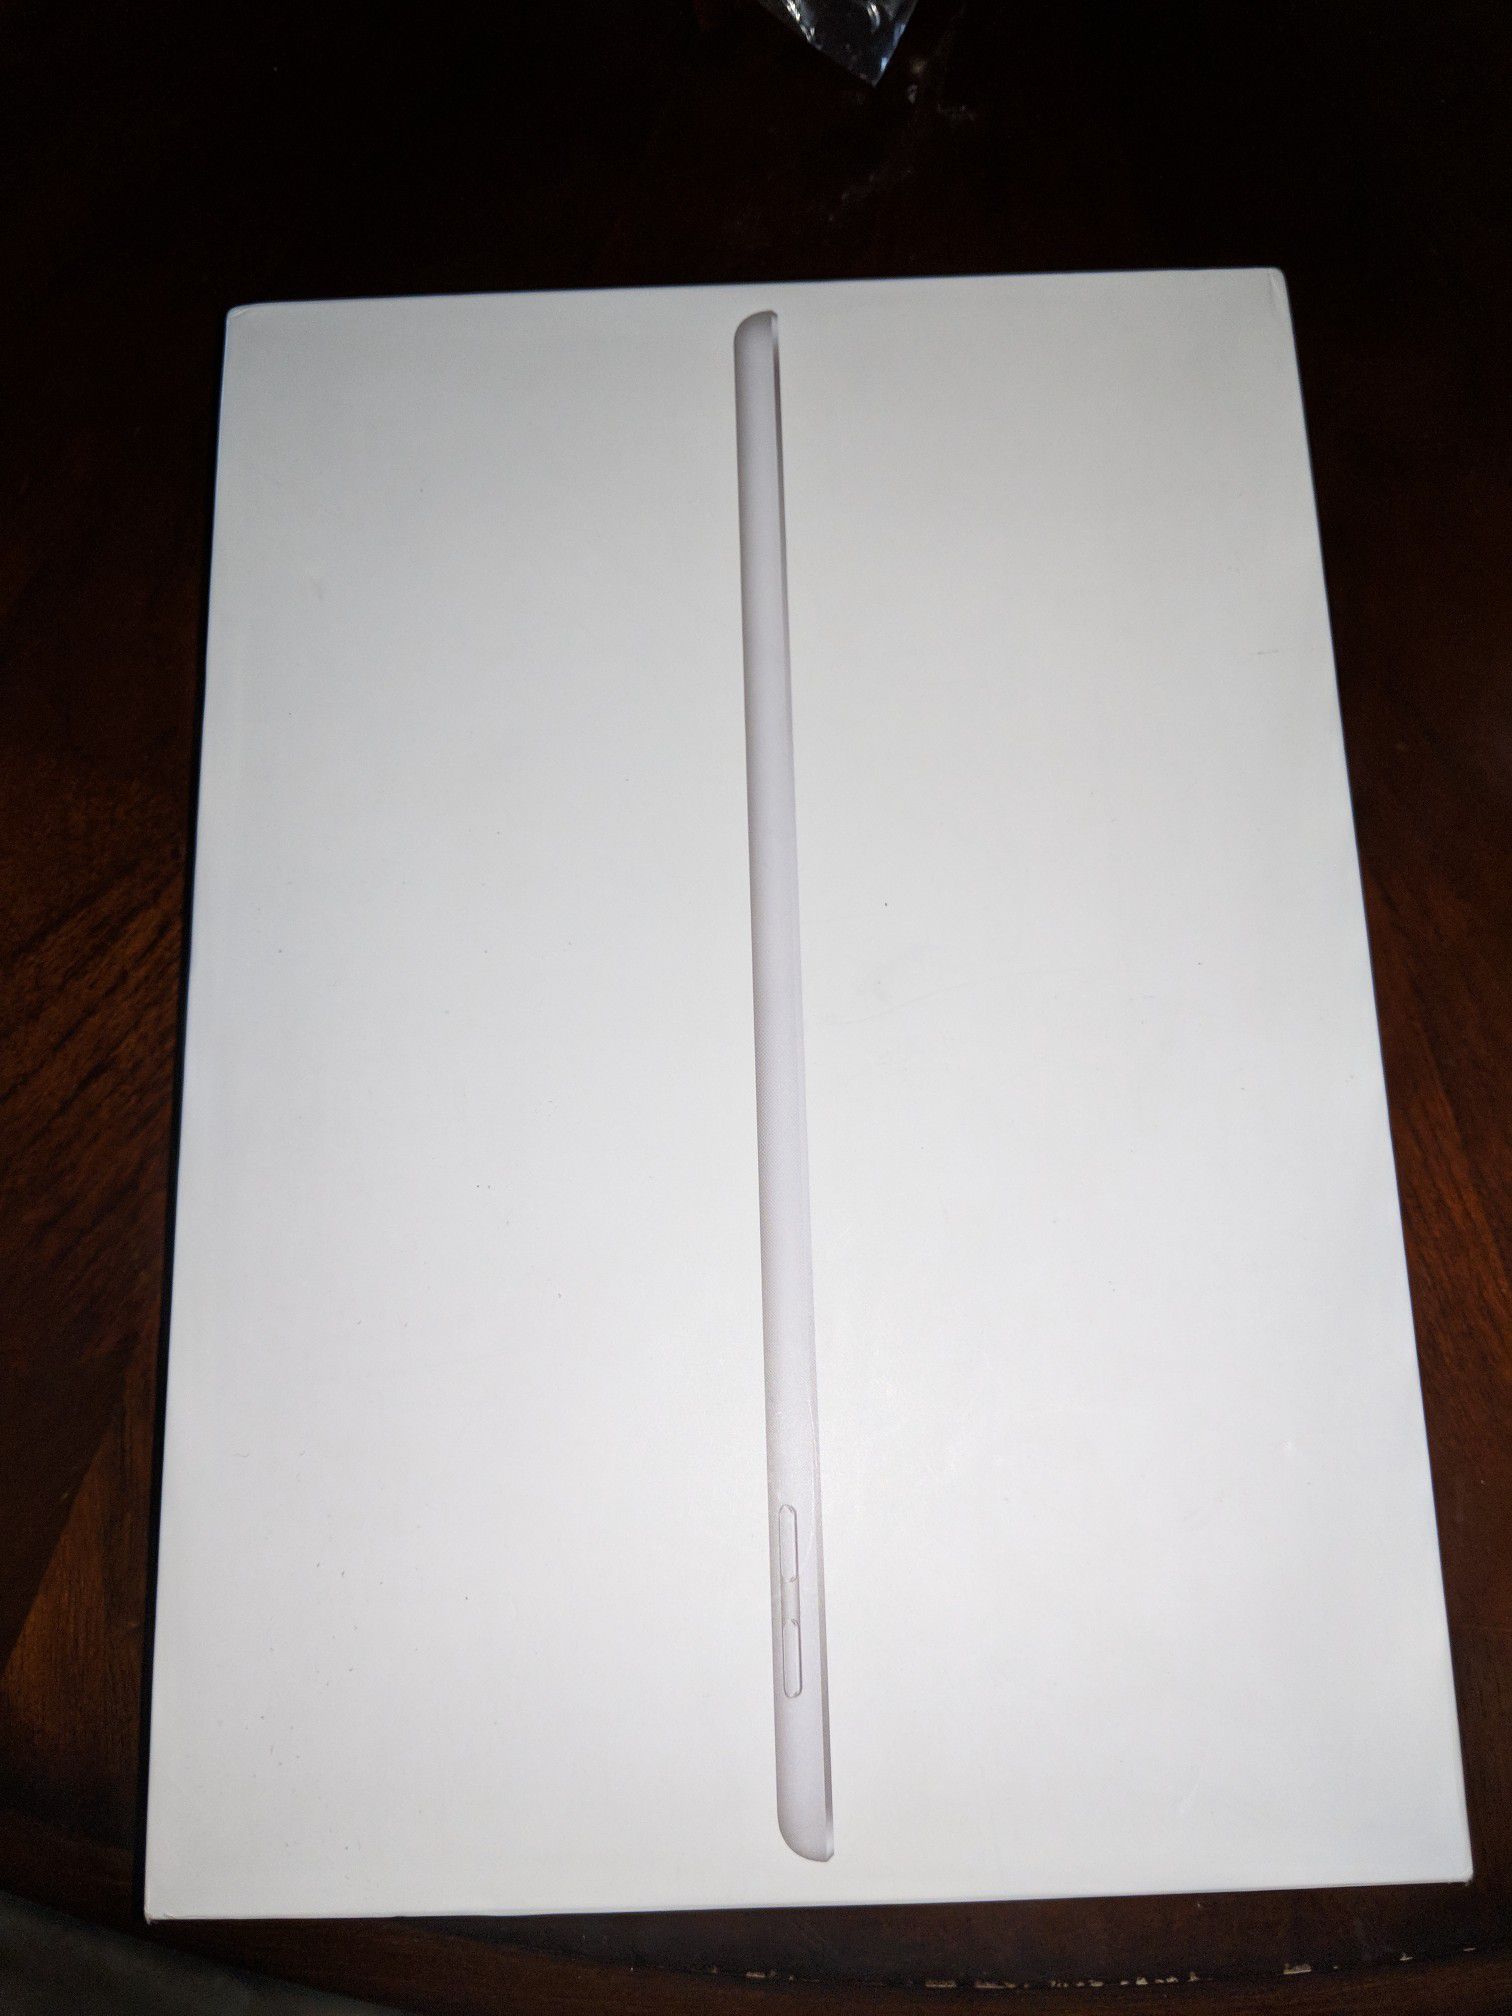 iPad Air 2 BRAND NEW